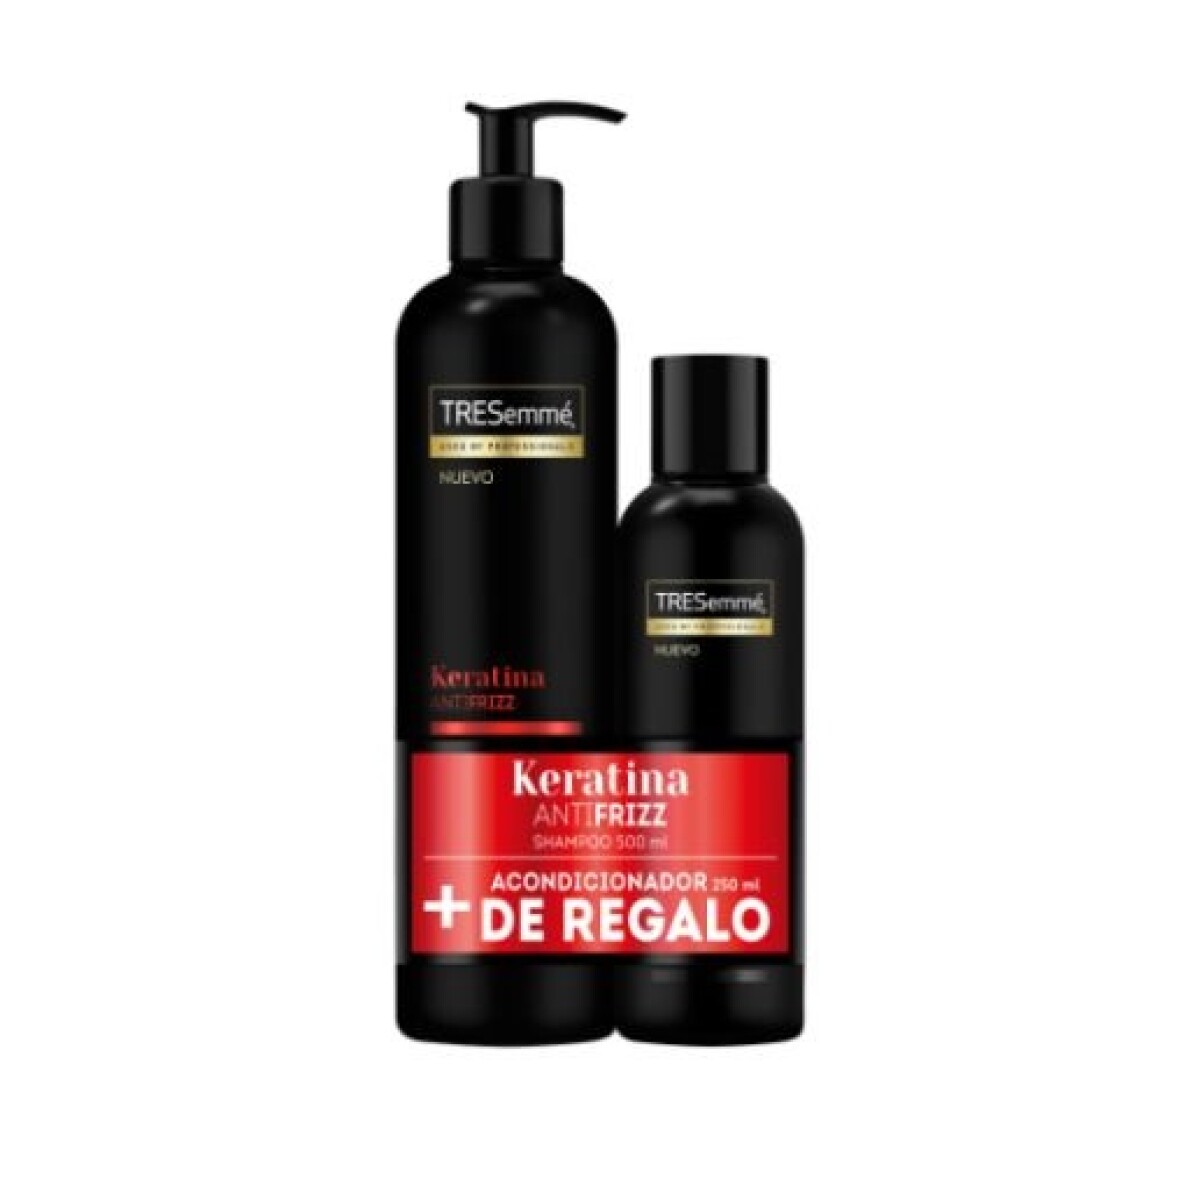 Shampoo Tresemme Keratina Antifrizz 500ml + Aco. 250ml 